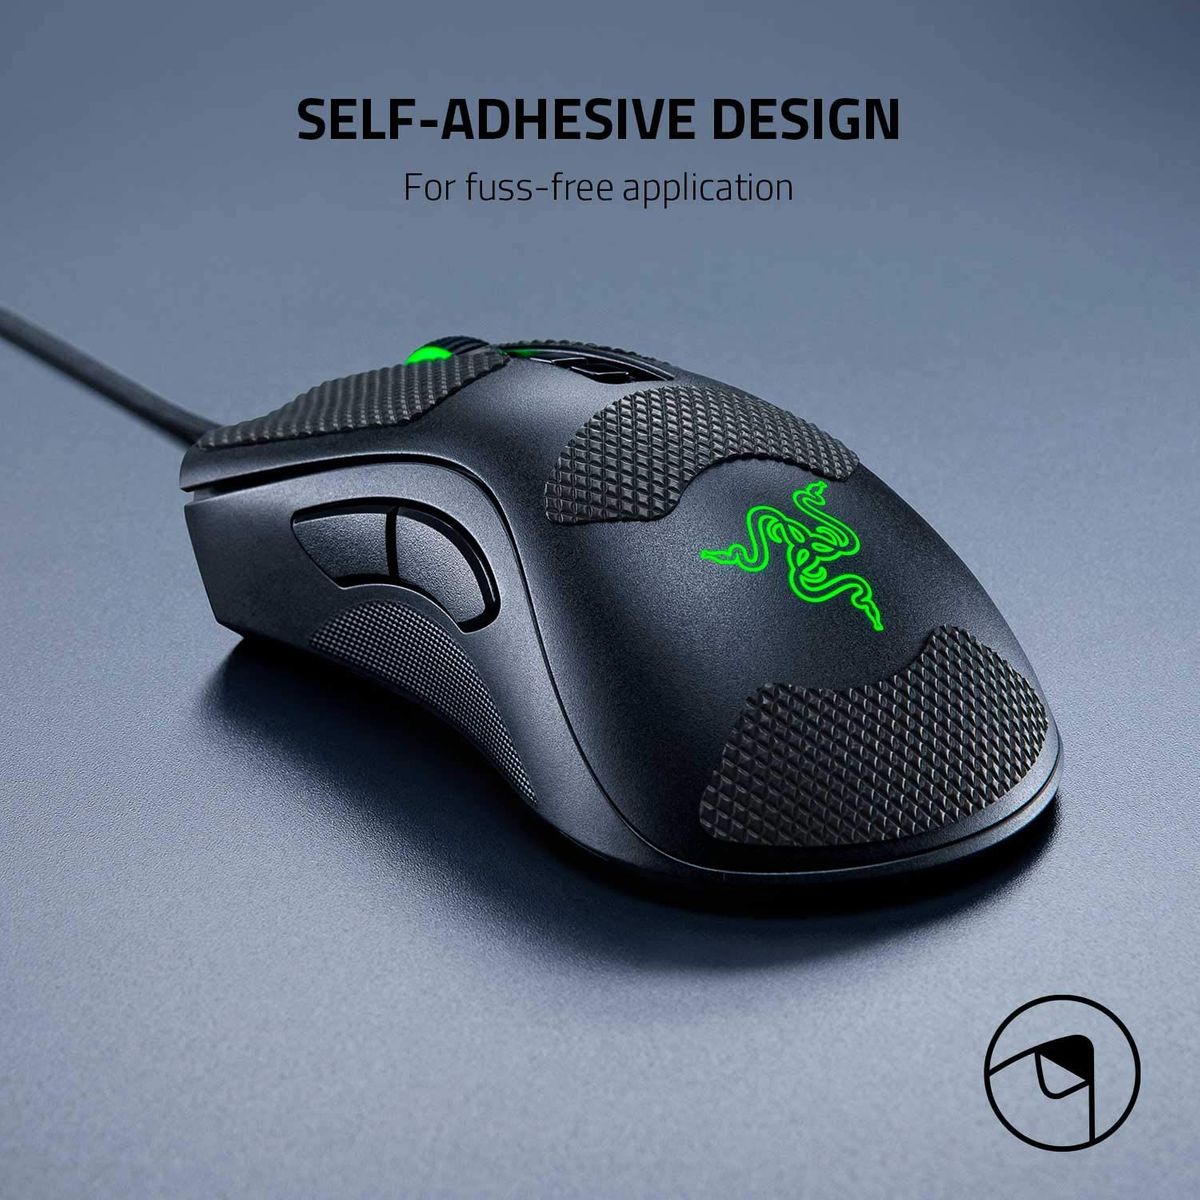 RAZER Mouse - Grip Tape for RAZER DeathAdder V2 Mini (Non-Slip, Self-Adhesive Design)